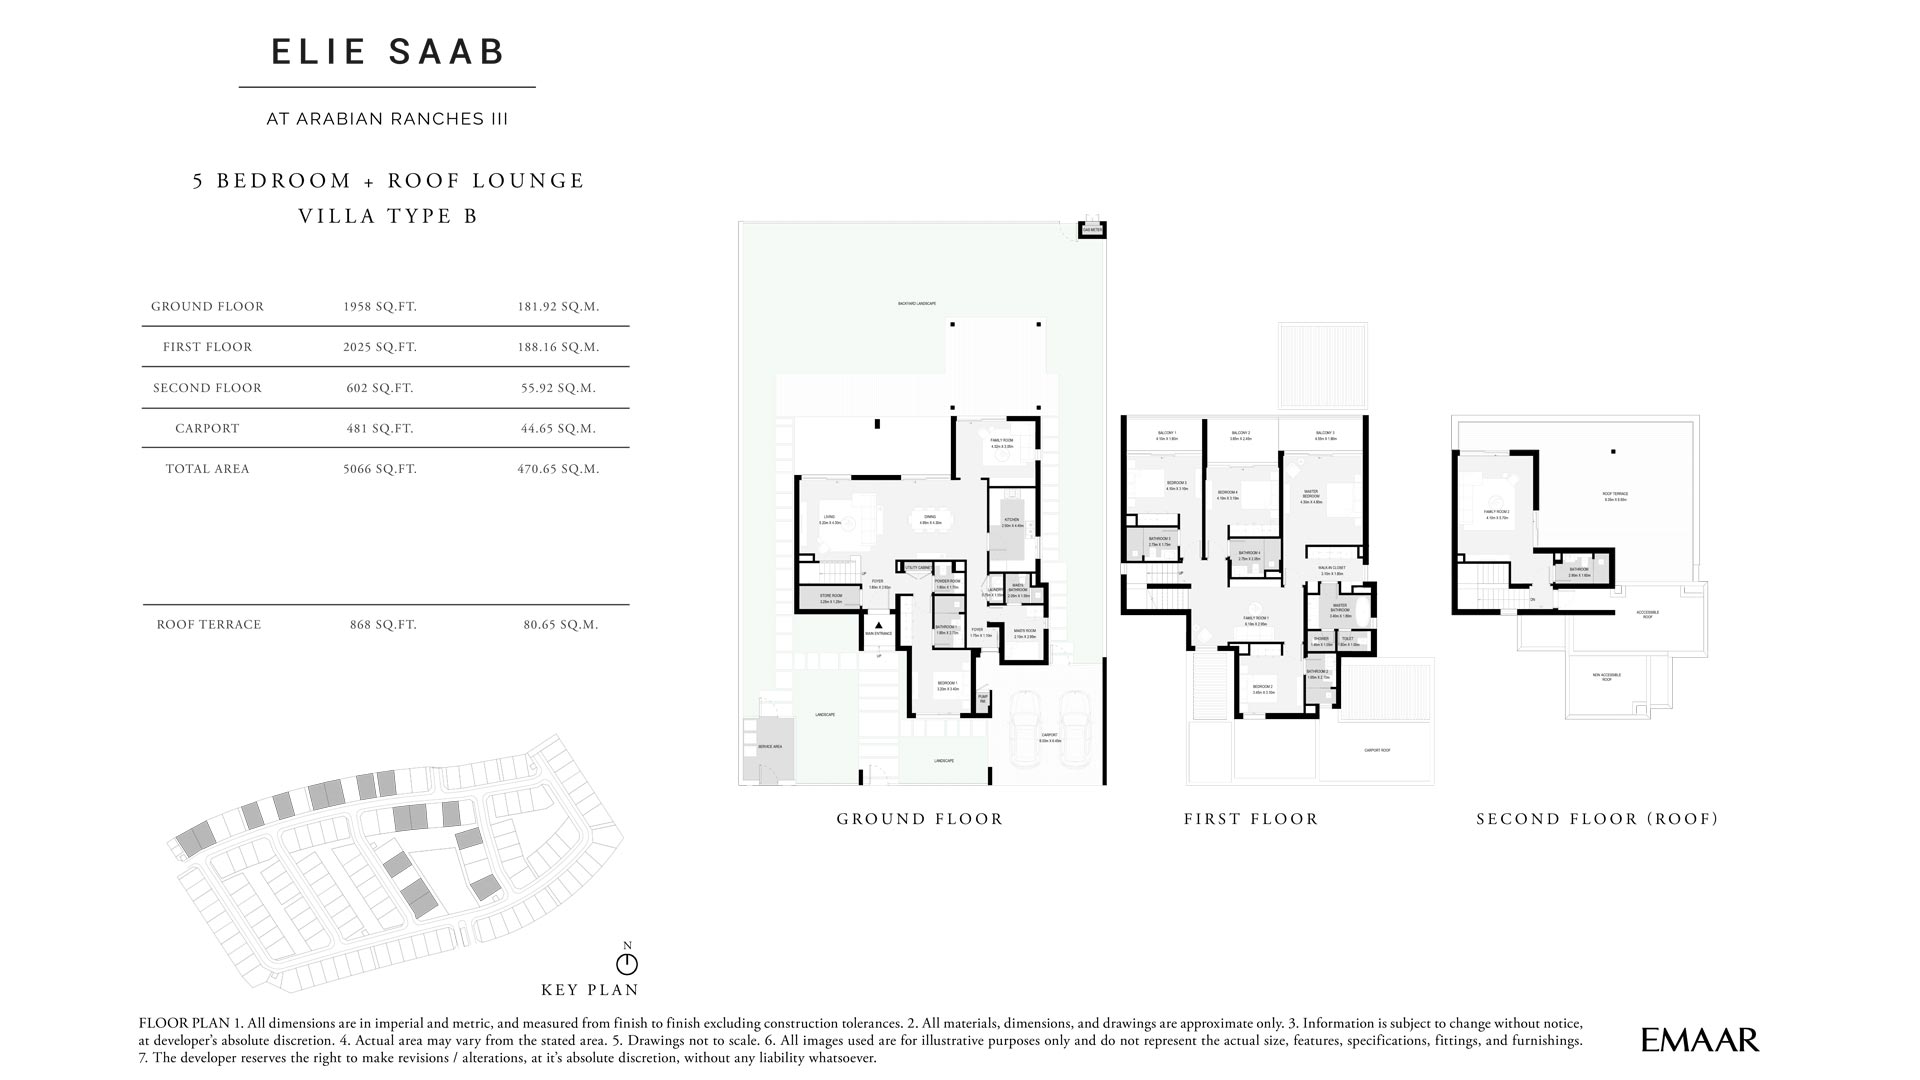 5 Bedroom Type B Elie Saab Villas Floor Plan